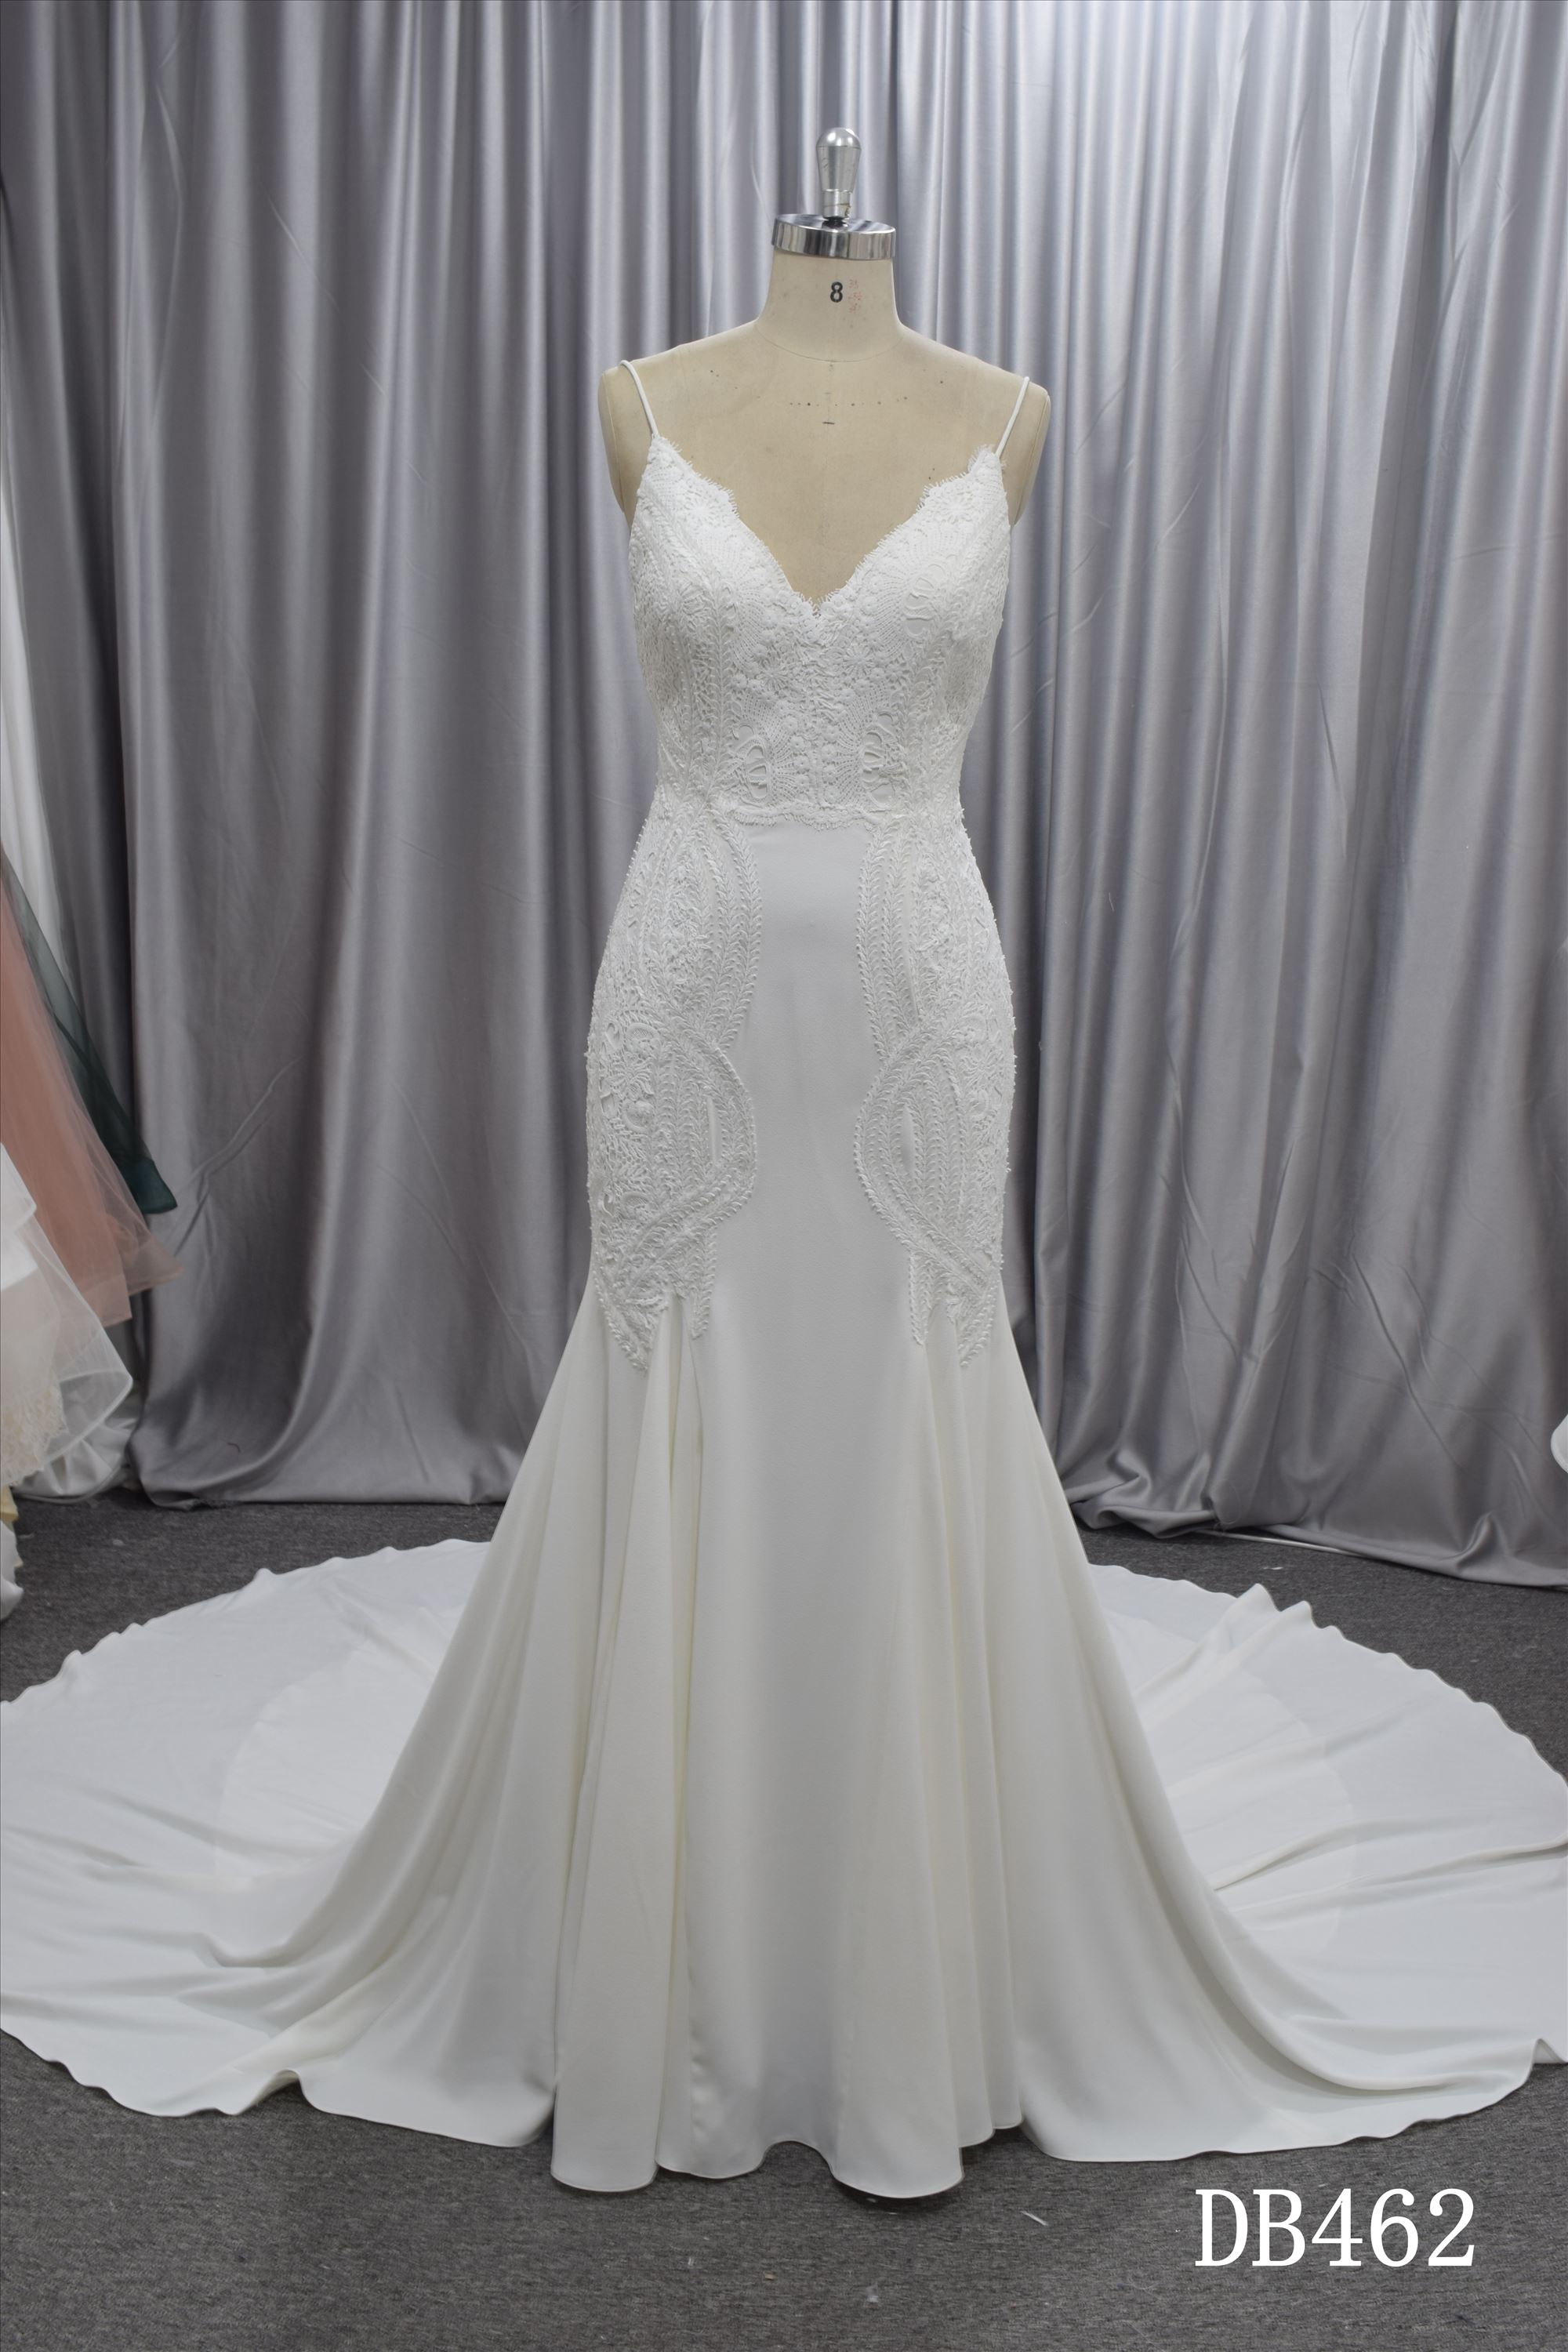 Spaghetti straps crepe wedding dress mermaid style bridal gown